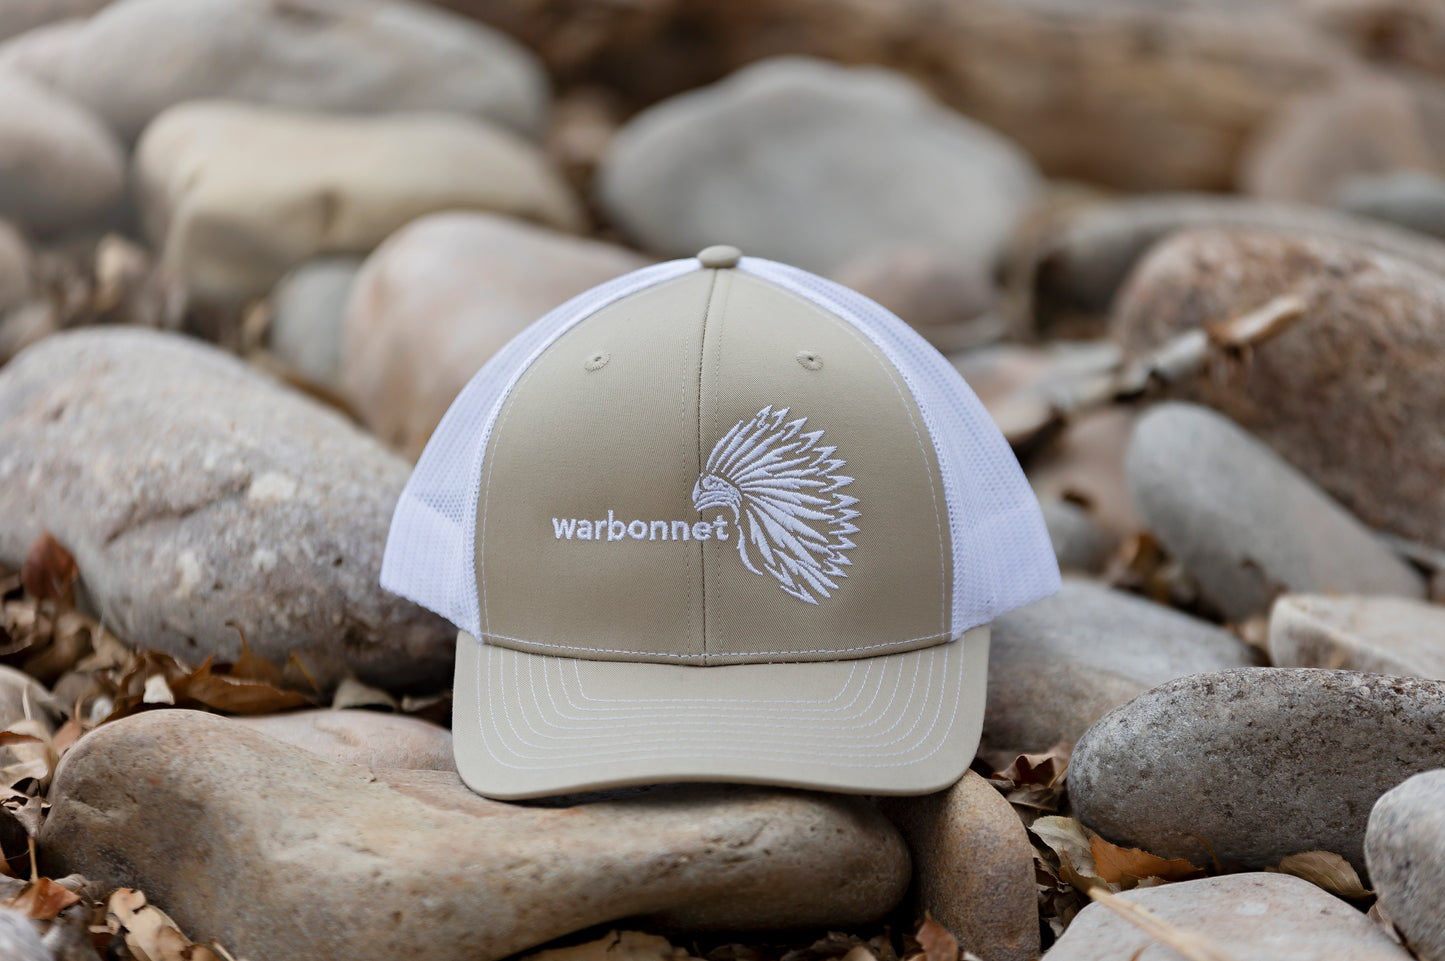 warbonnet trucker hat - Khaki / White